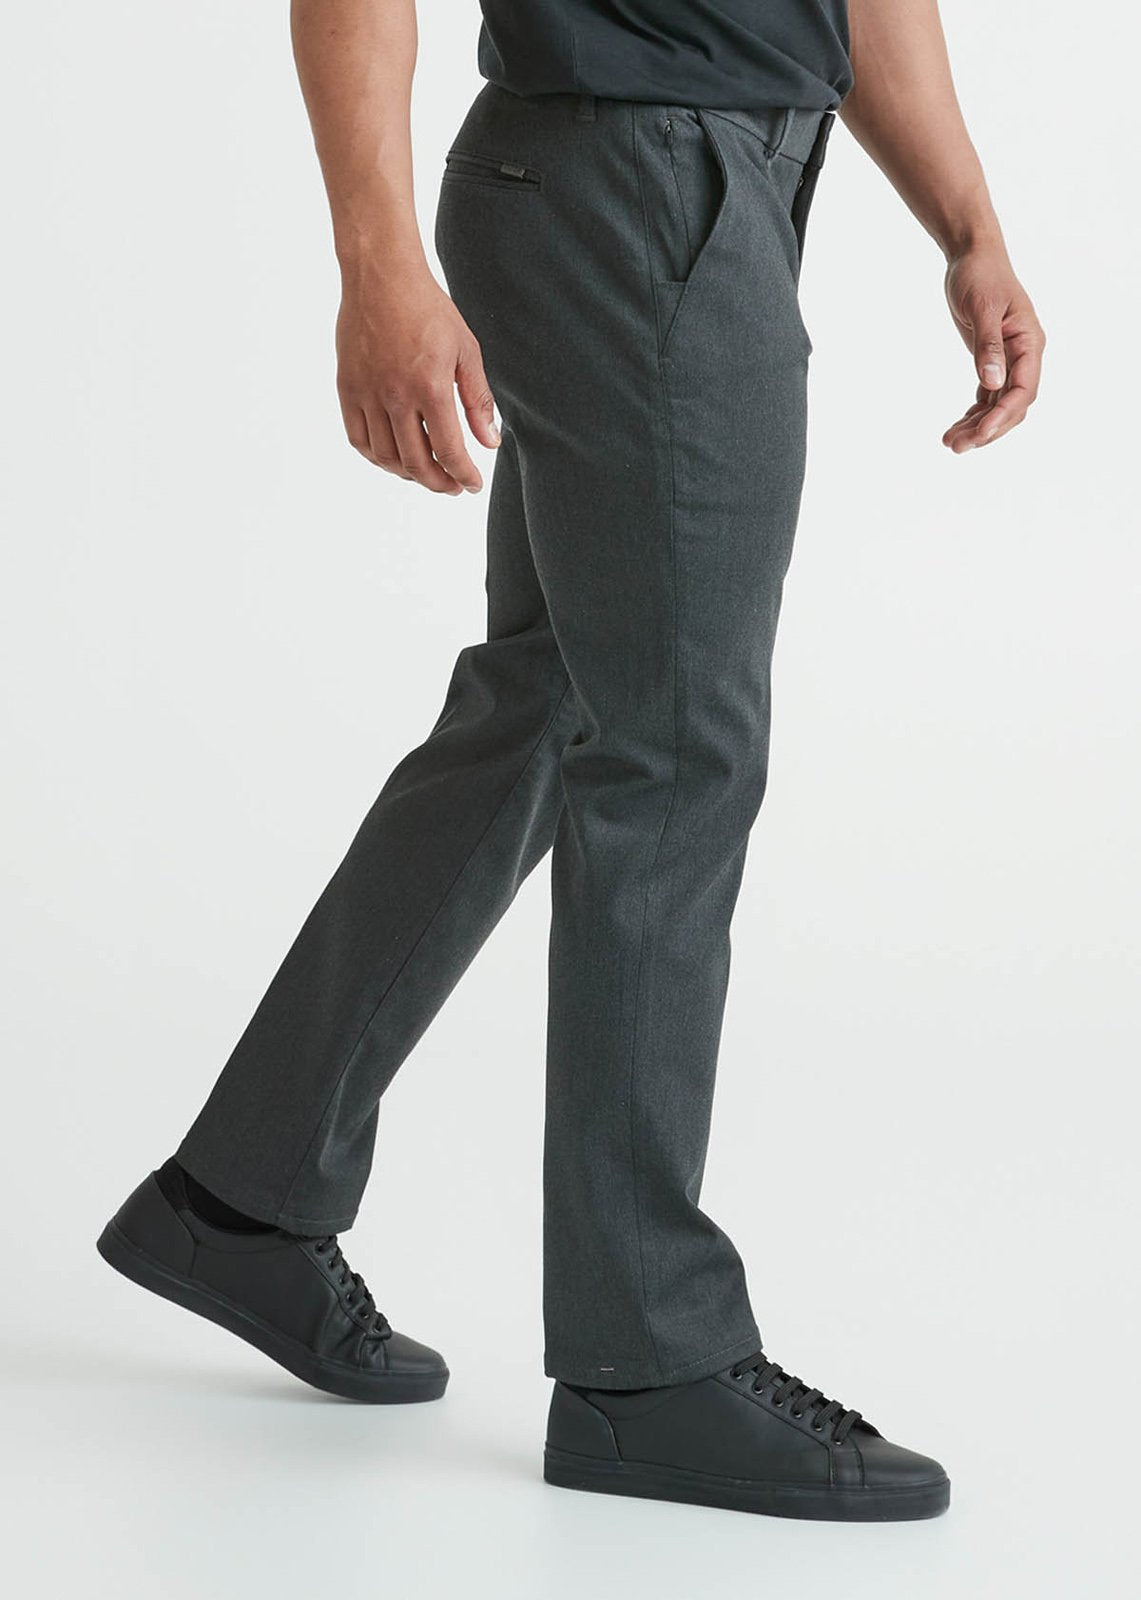 2-Pcs Combo Stretchable Pants Colourful Atractiv Designe Use